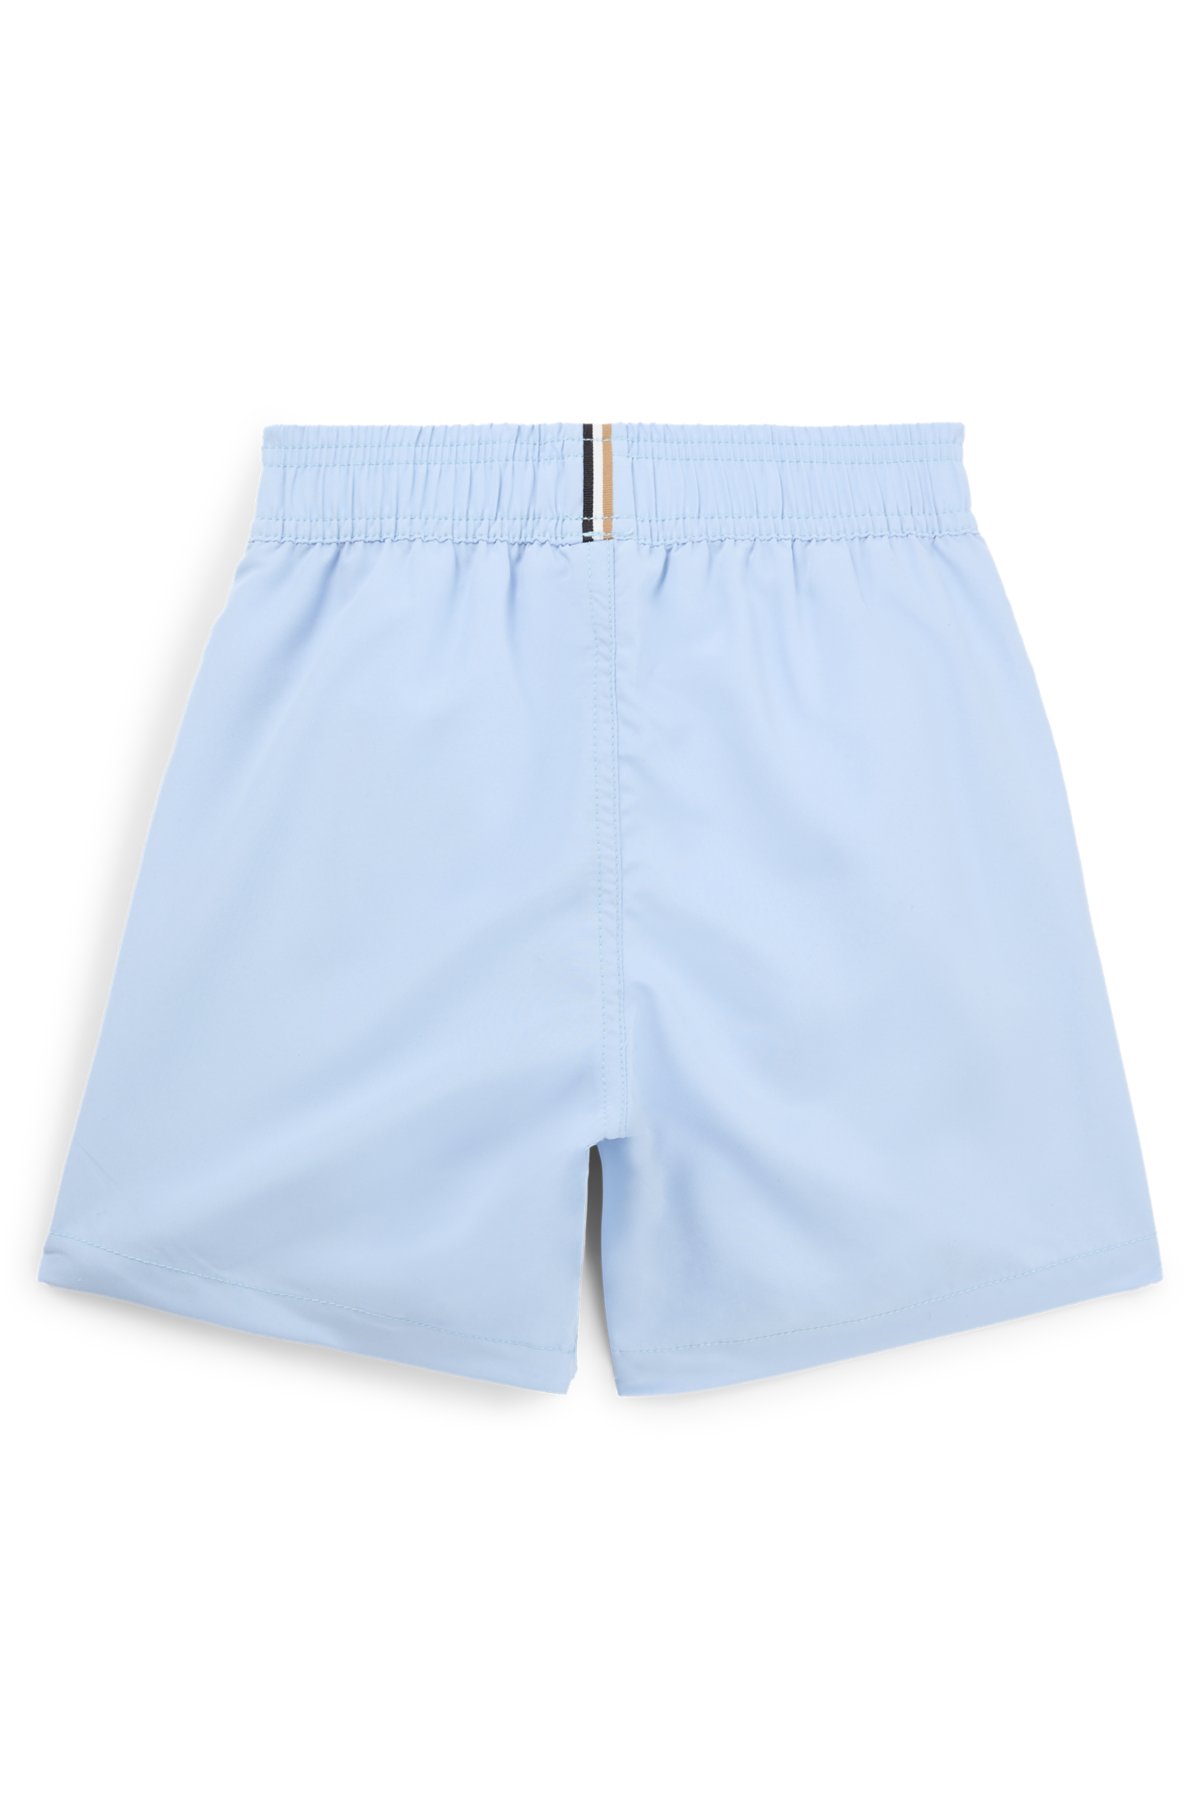 Kids' quick-dry swim shorts with vertical logo, Light Blue